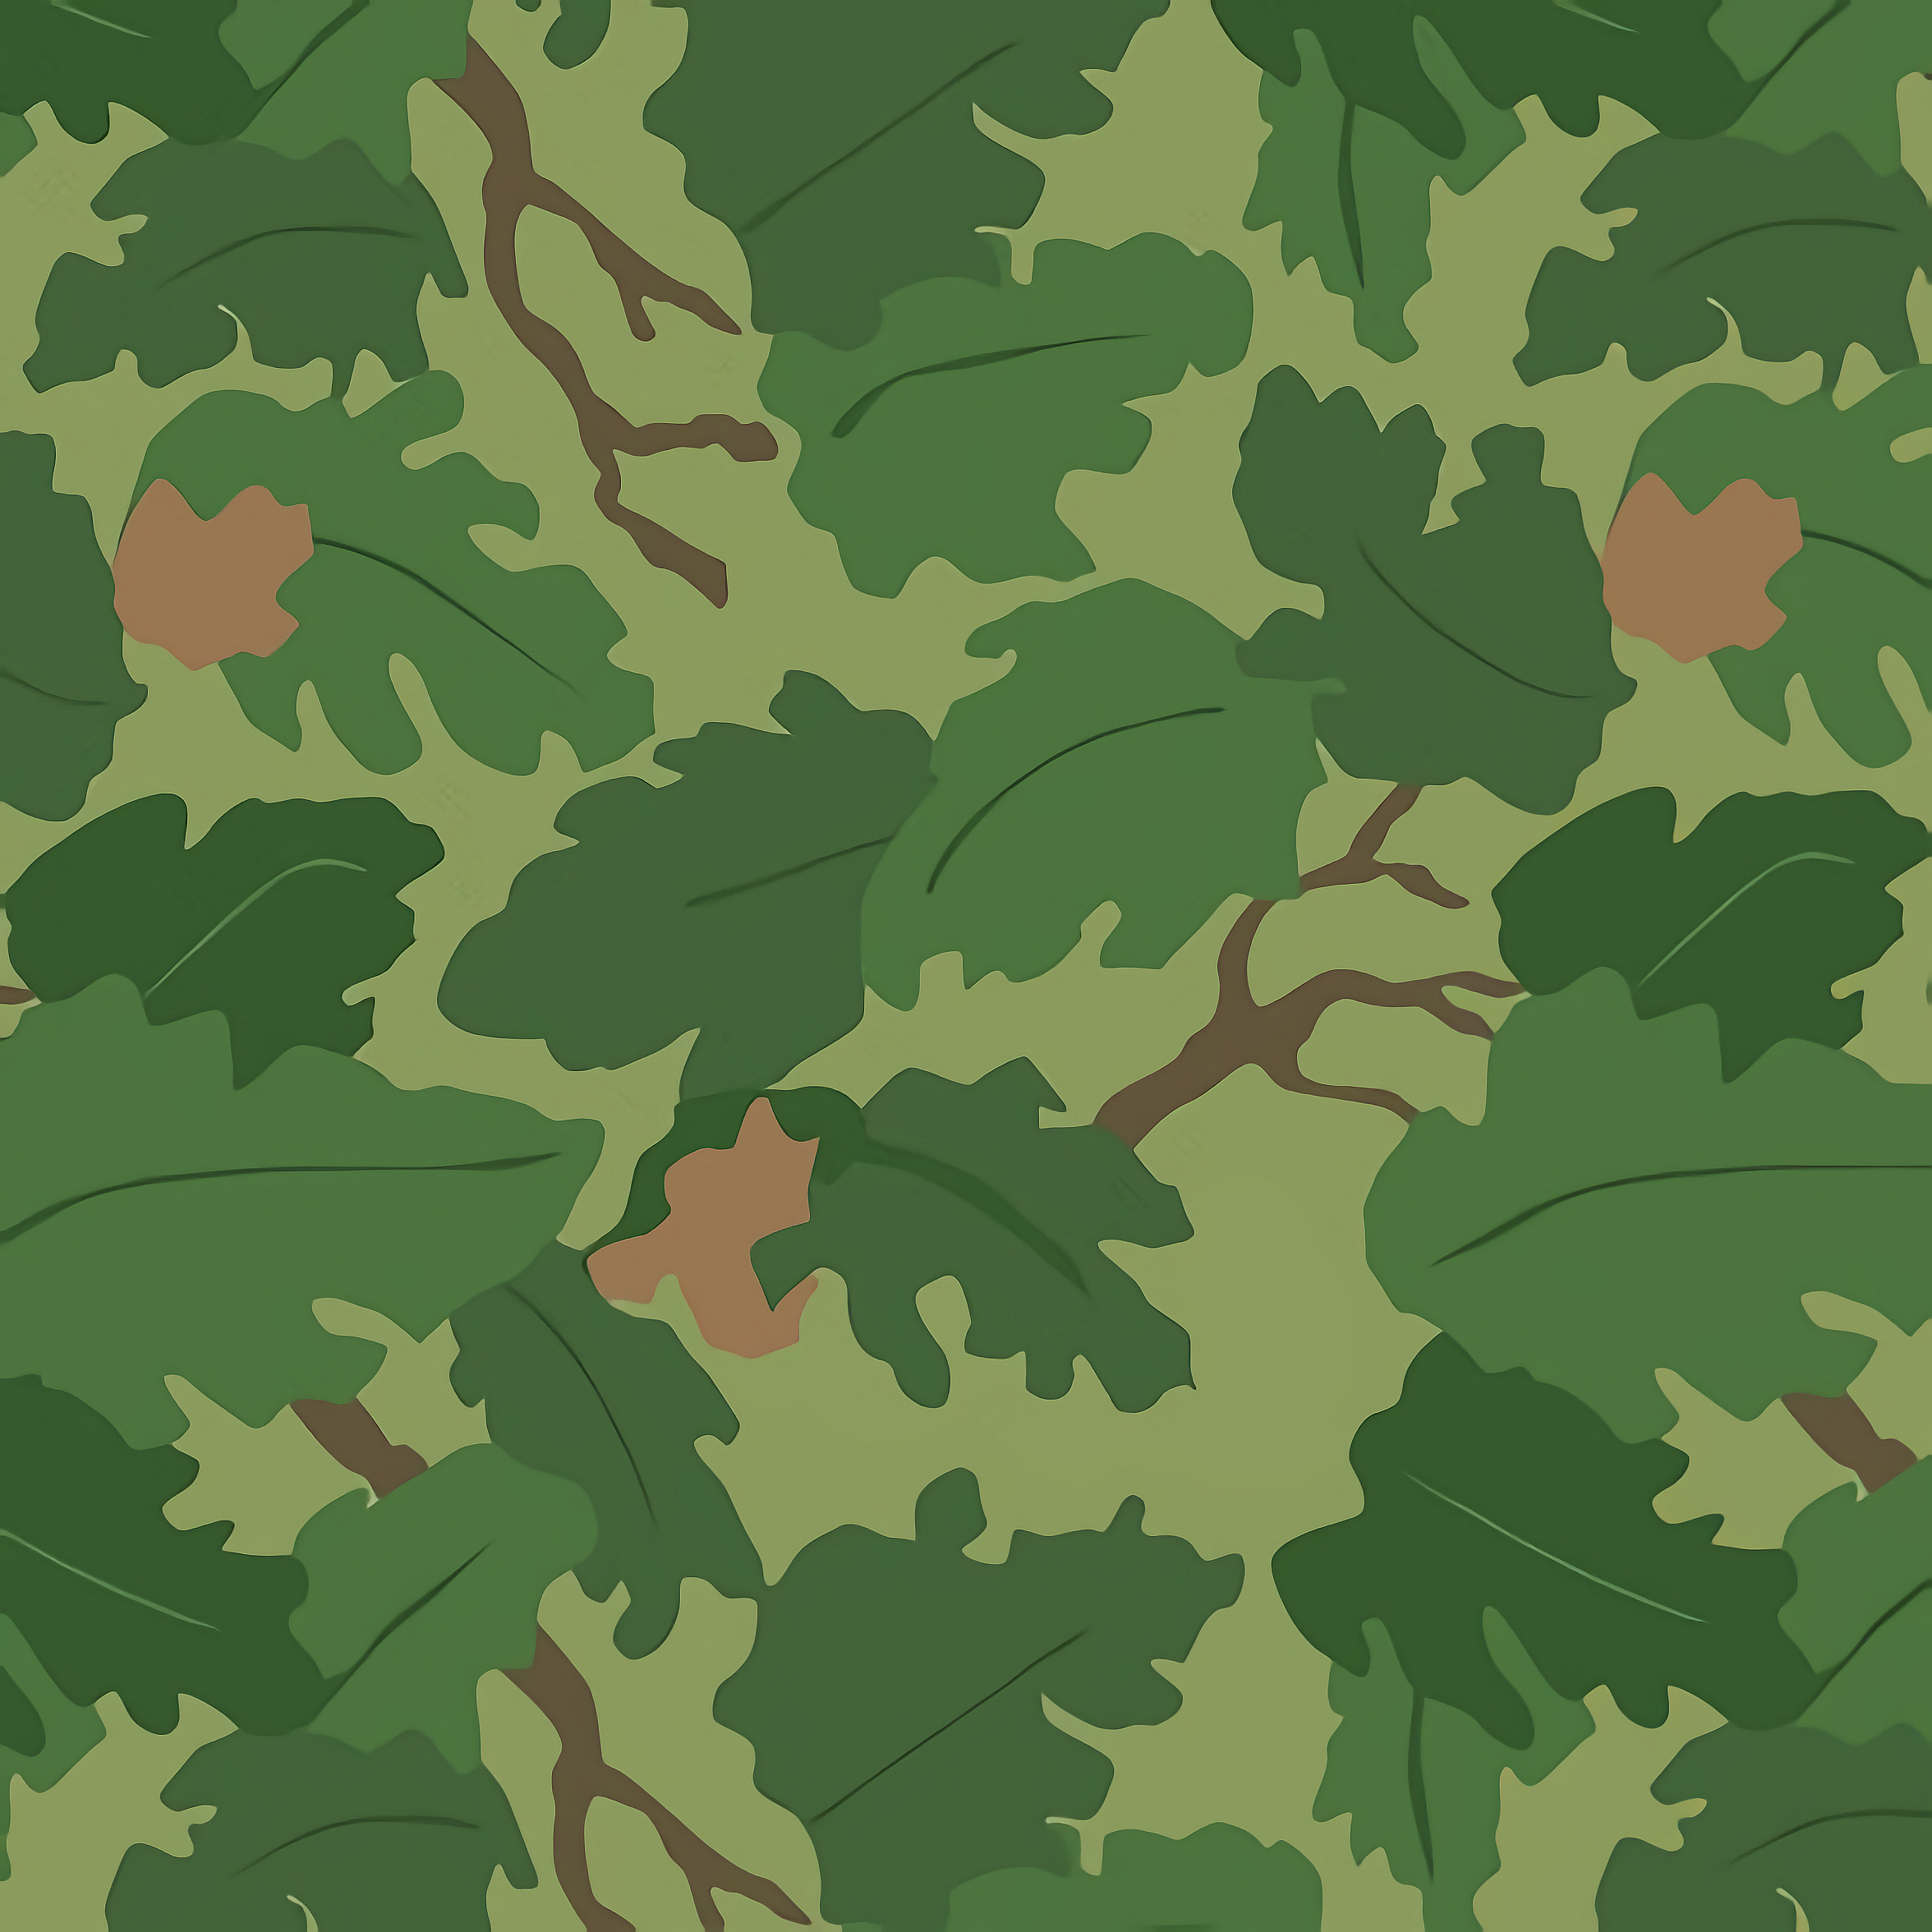 Camouflage USMC Leaves 2352x2352